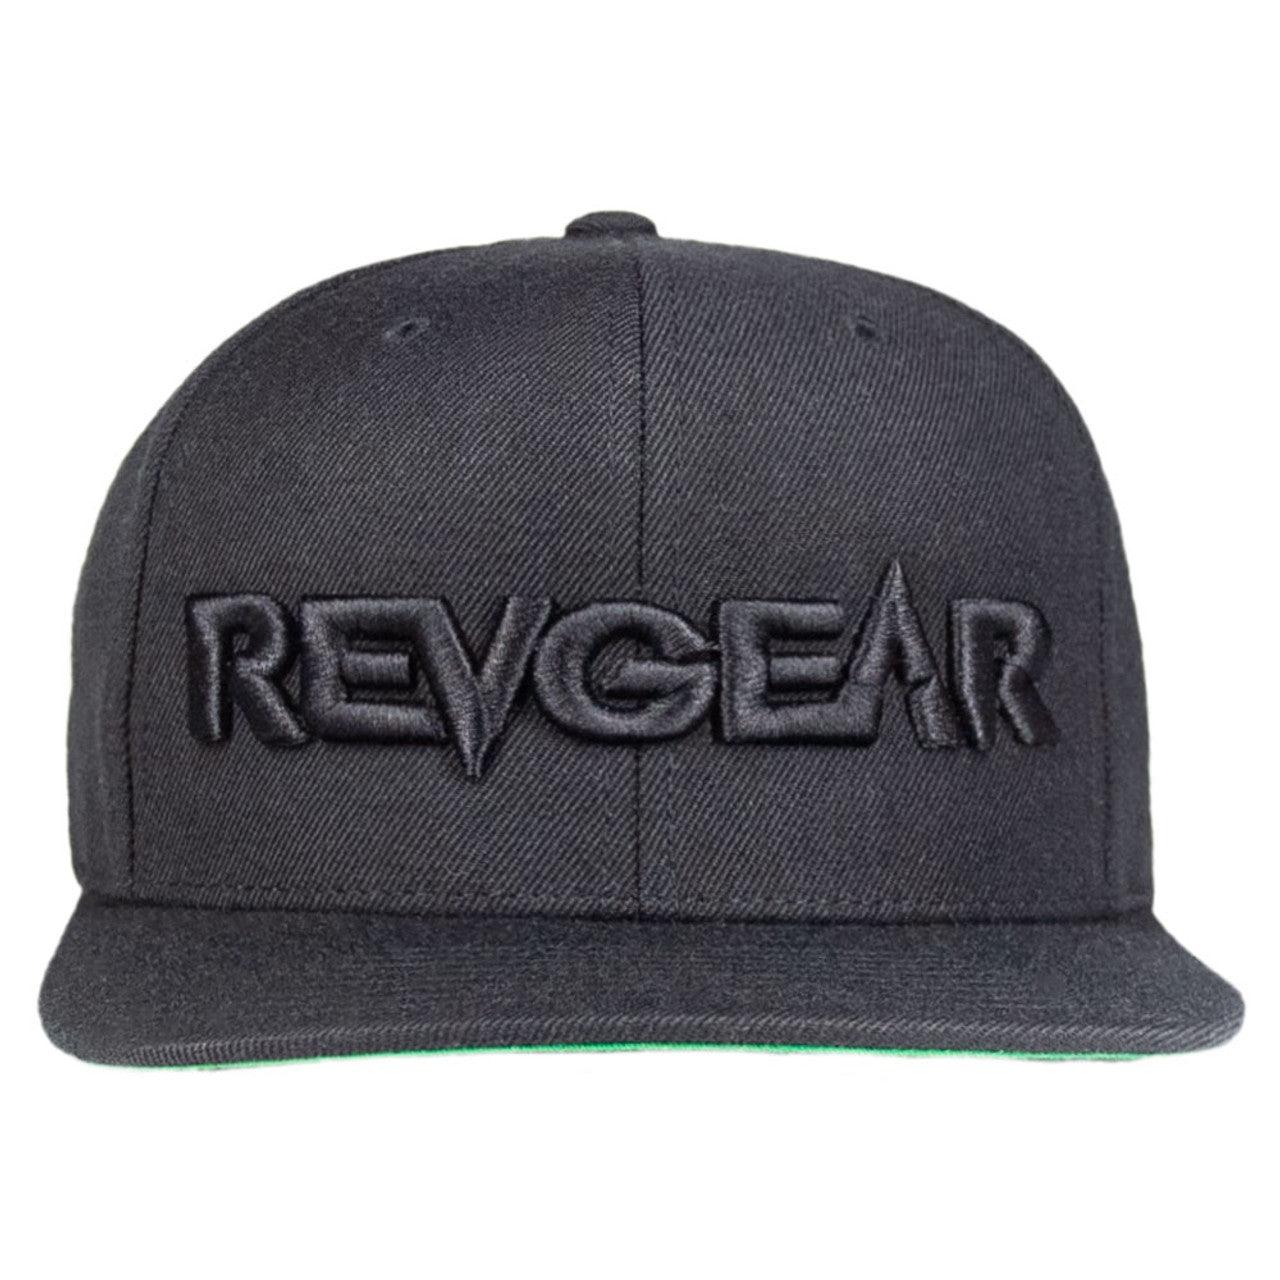 3D Revgear Premium Snapback Hat - Black / Black - Violent Art Shop